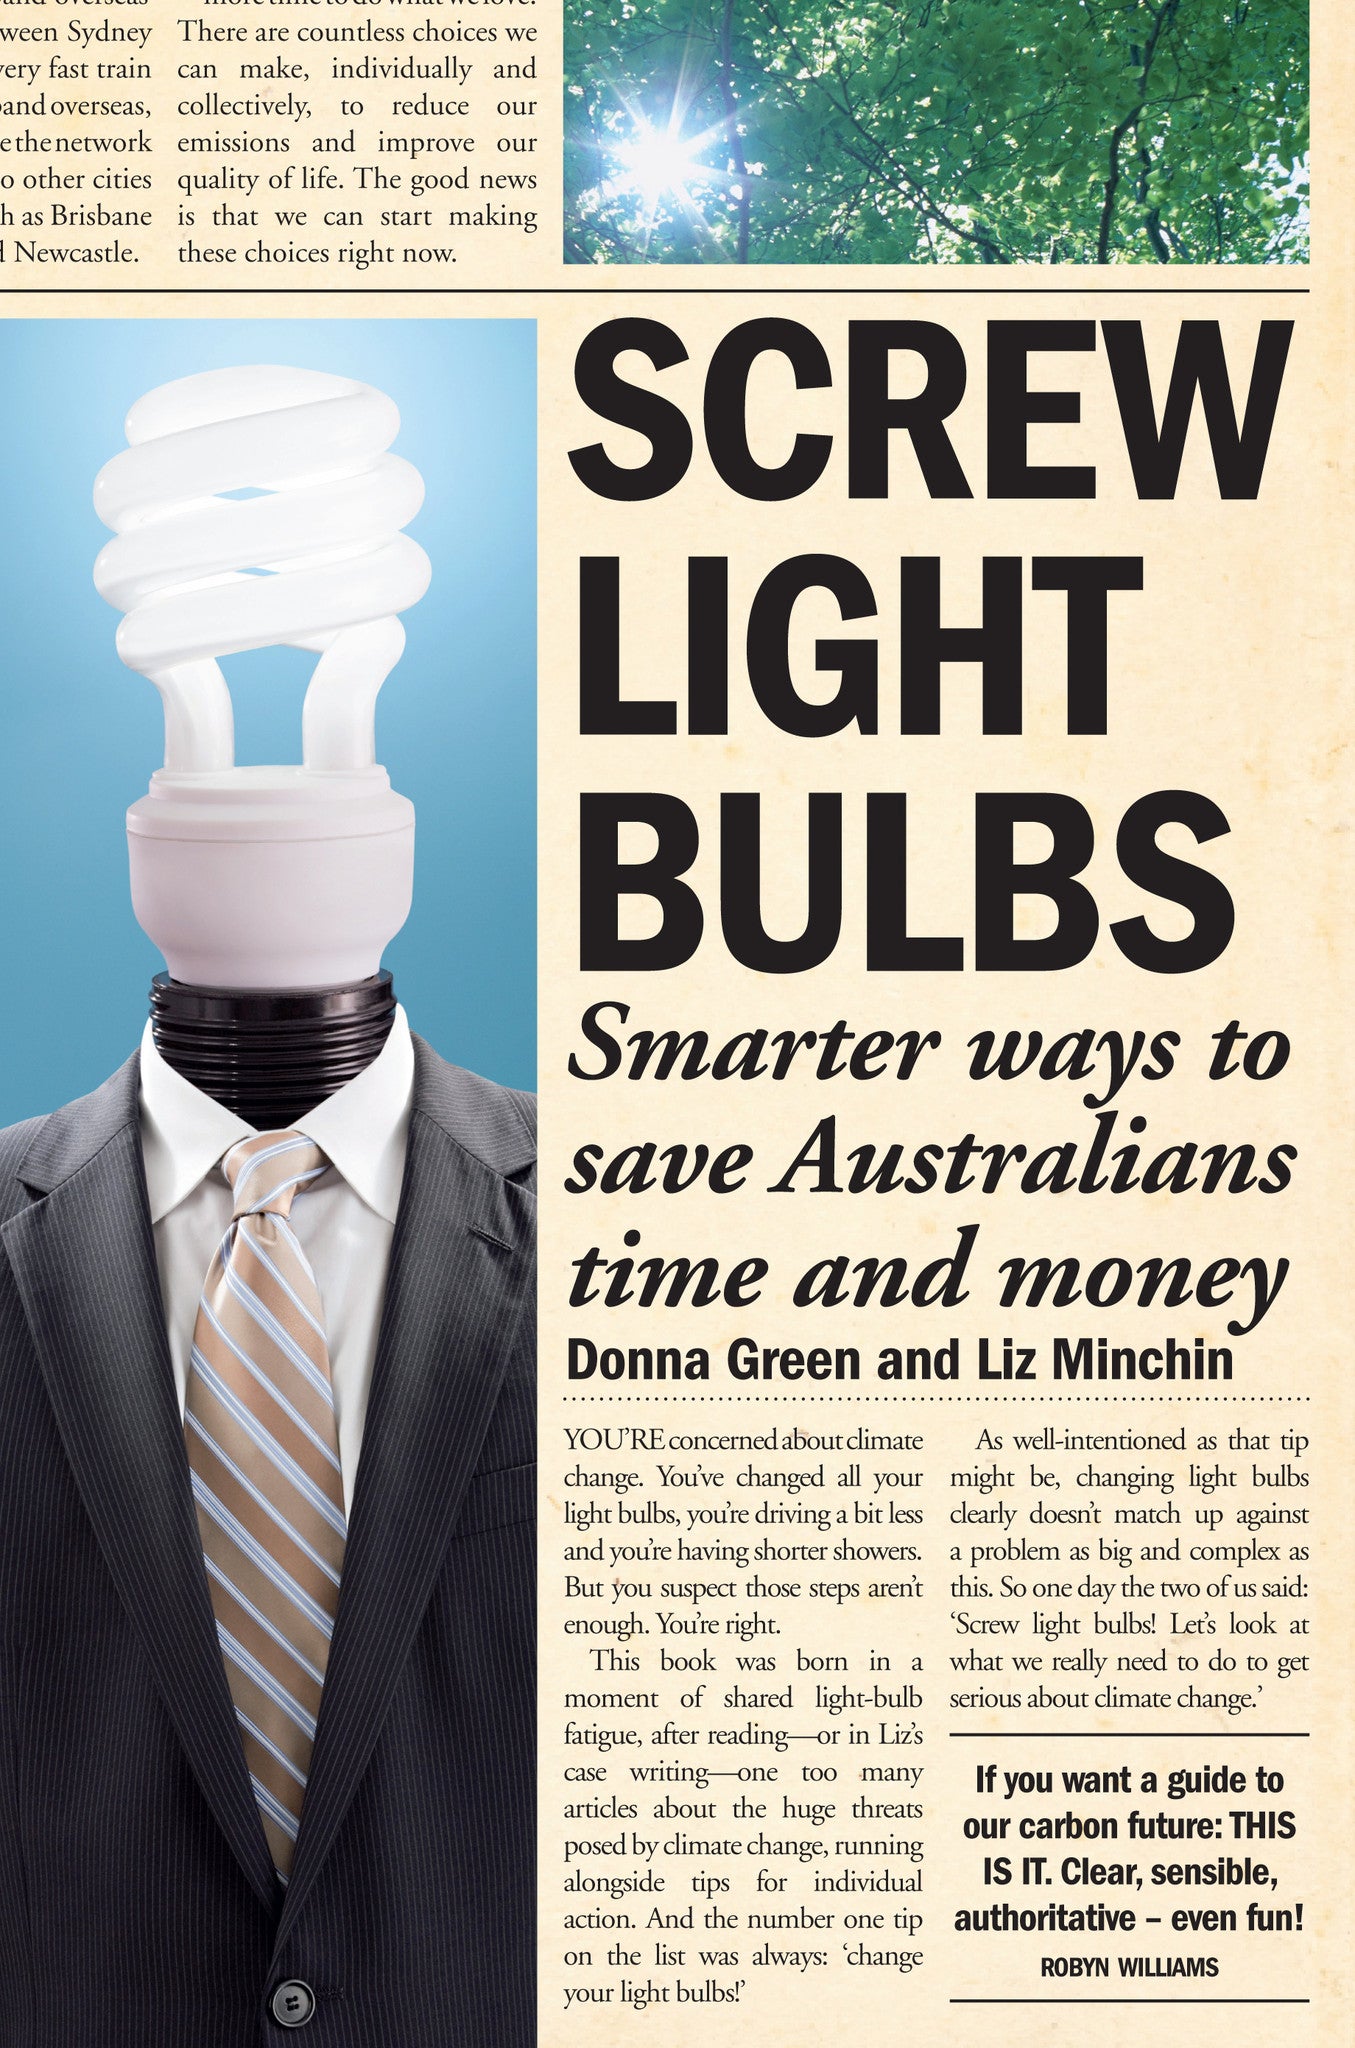 Screw Light Bulbs: Smarter ways to save Australians time and money